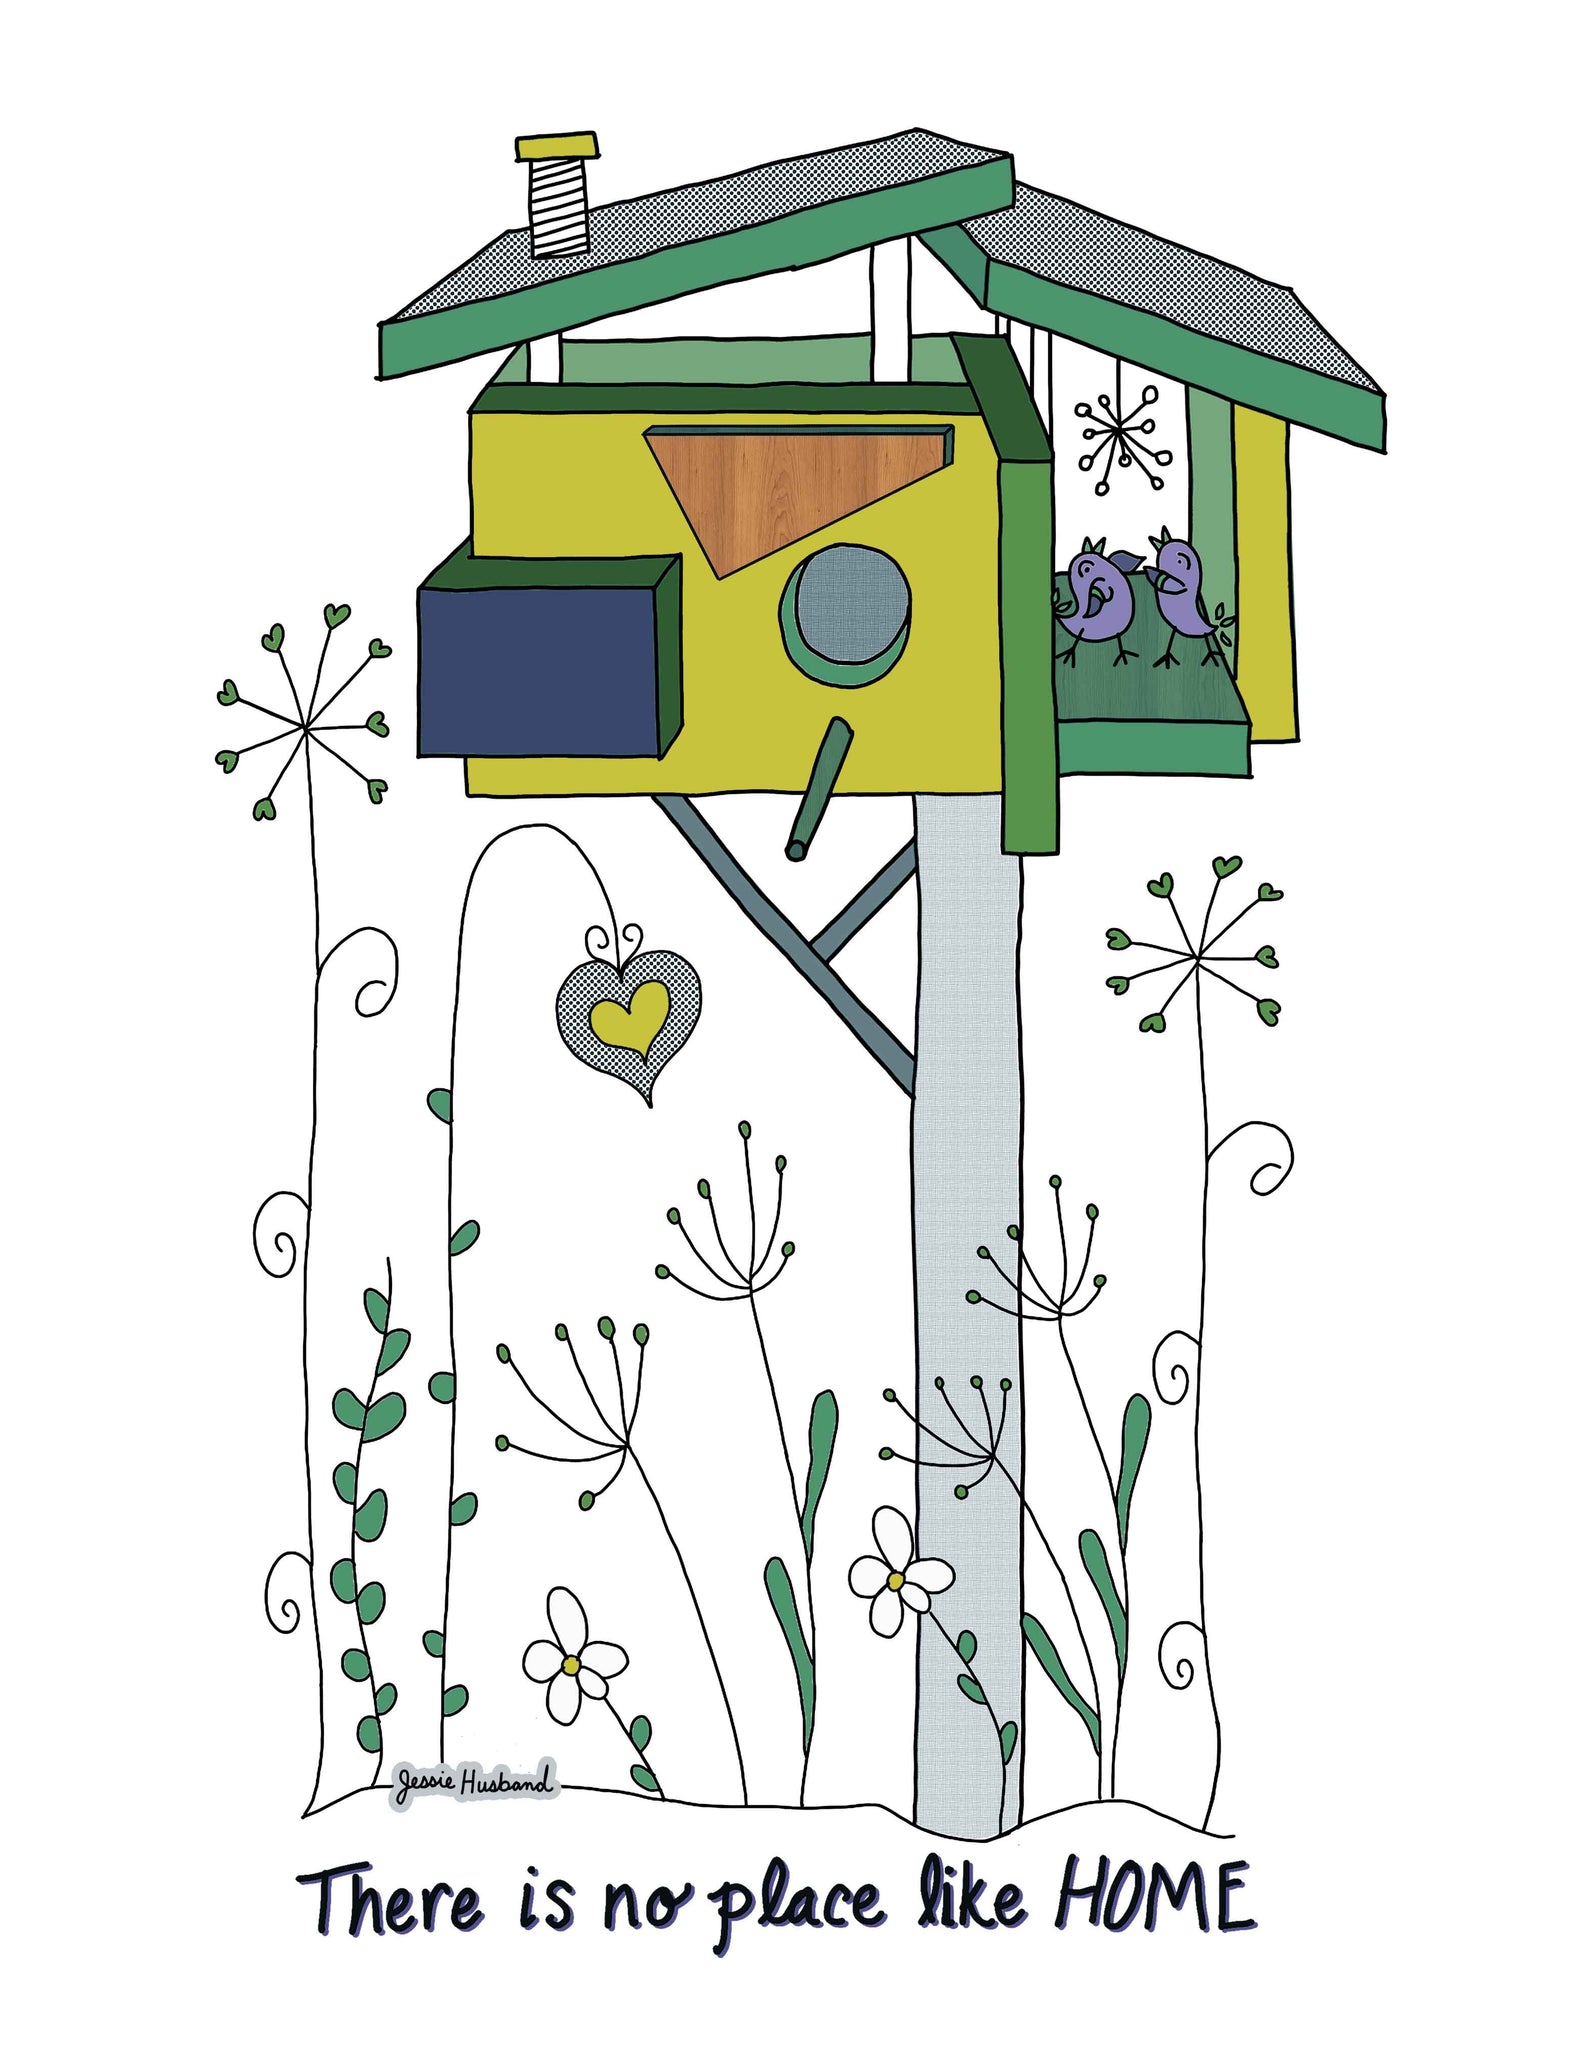 Custom Housewarming Art, birdhouse, modern, love, There is no place like home, Custom plaque, Home